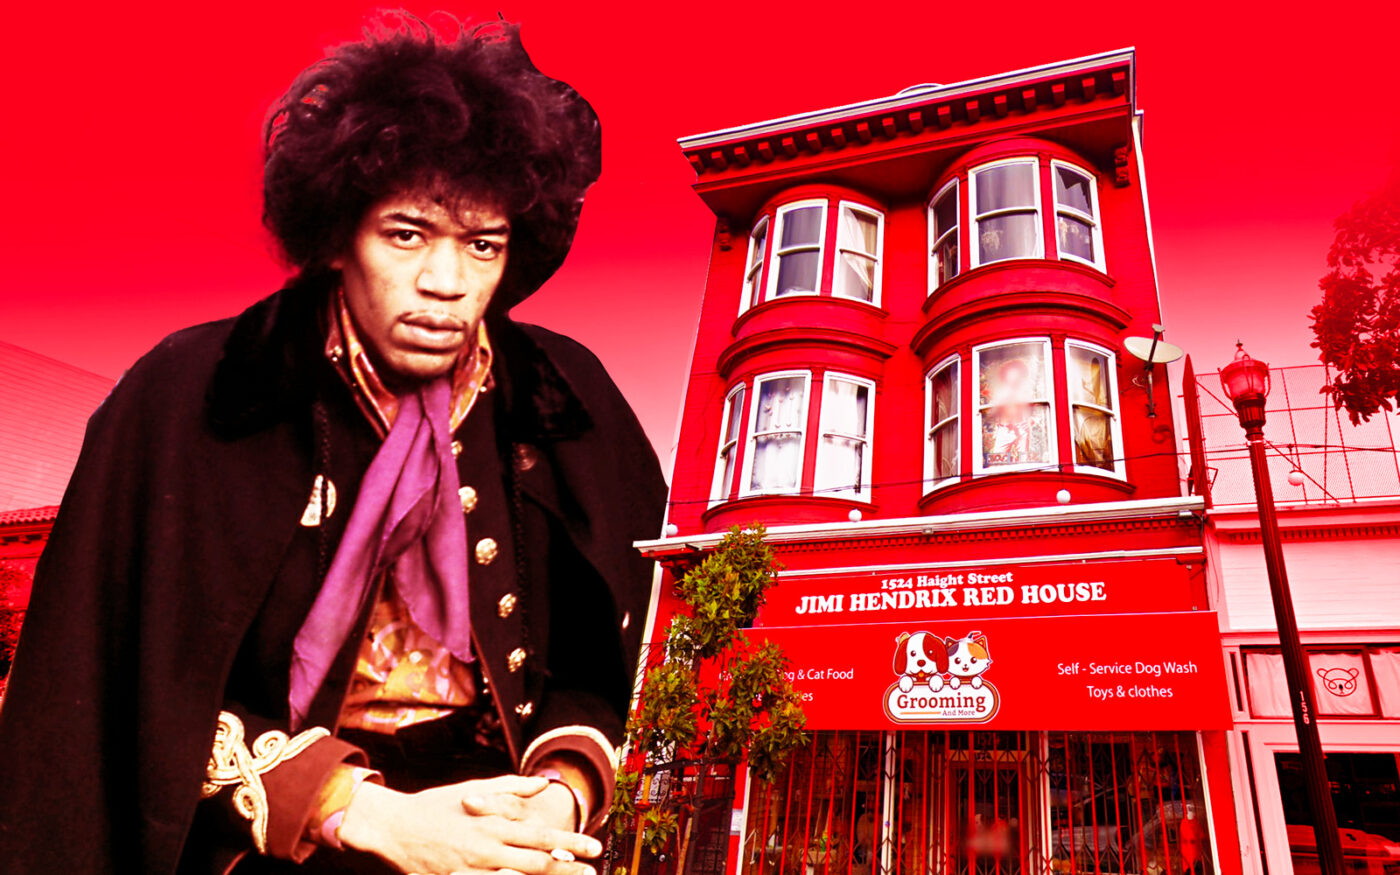 Jimi Hendrix Red House in San Francisco Nears Foreclosure